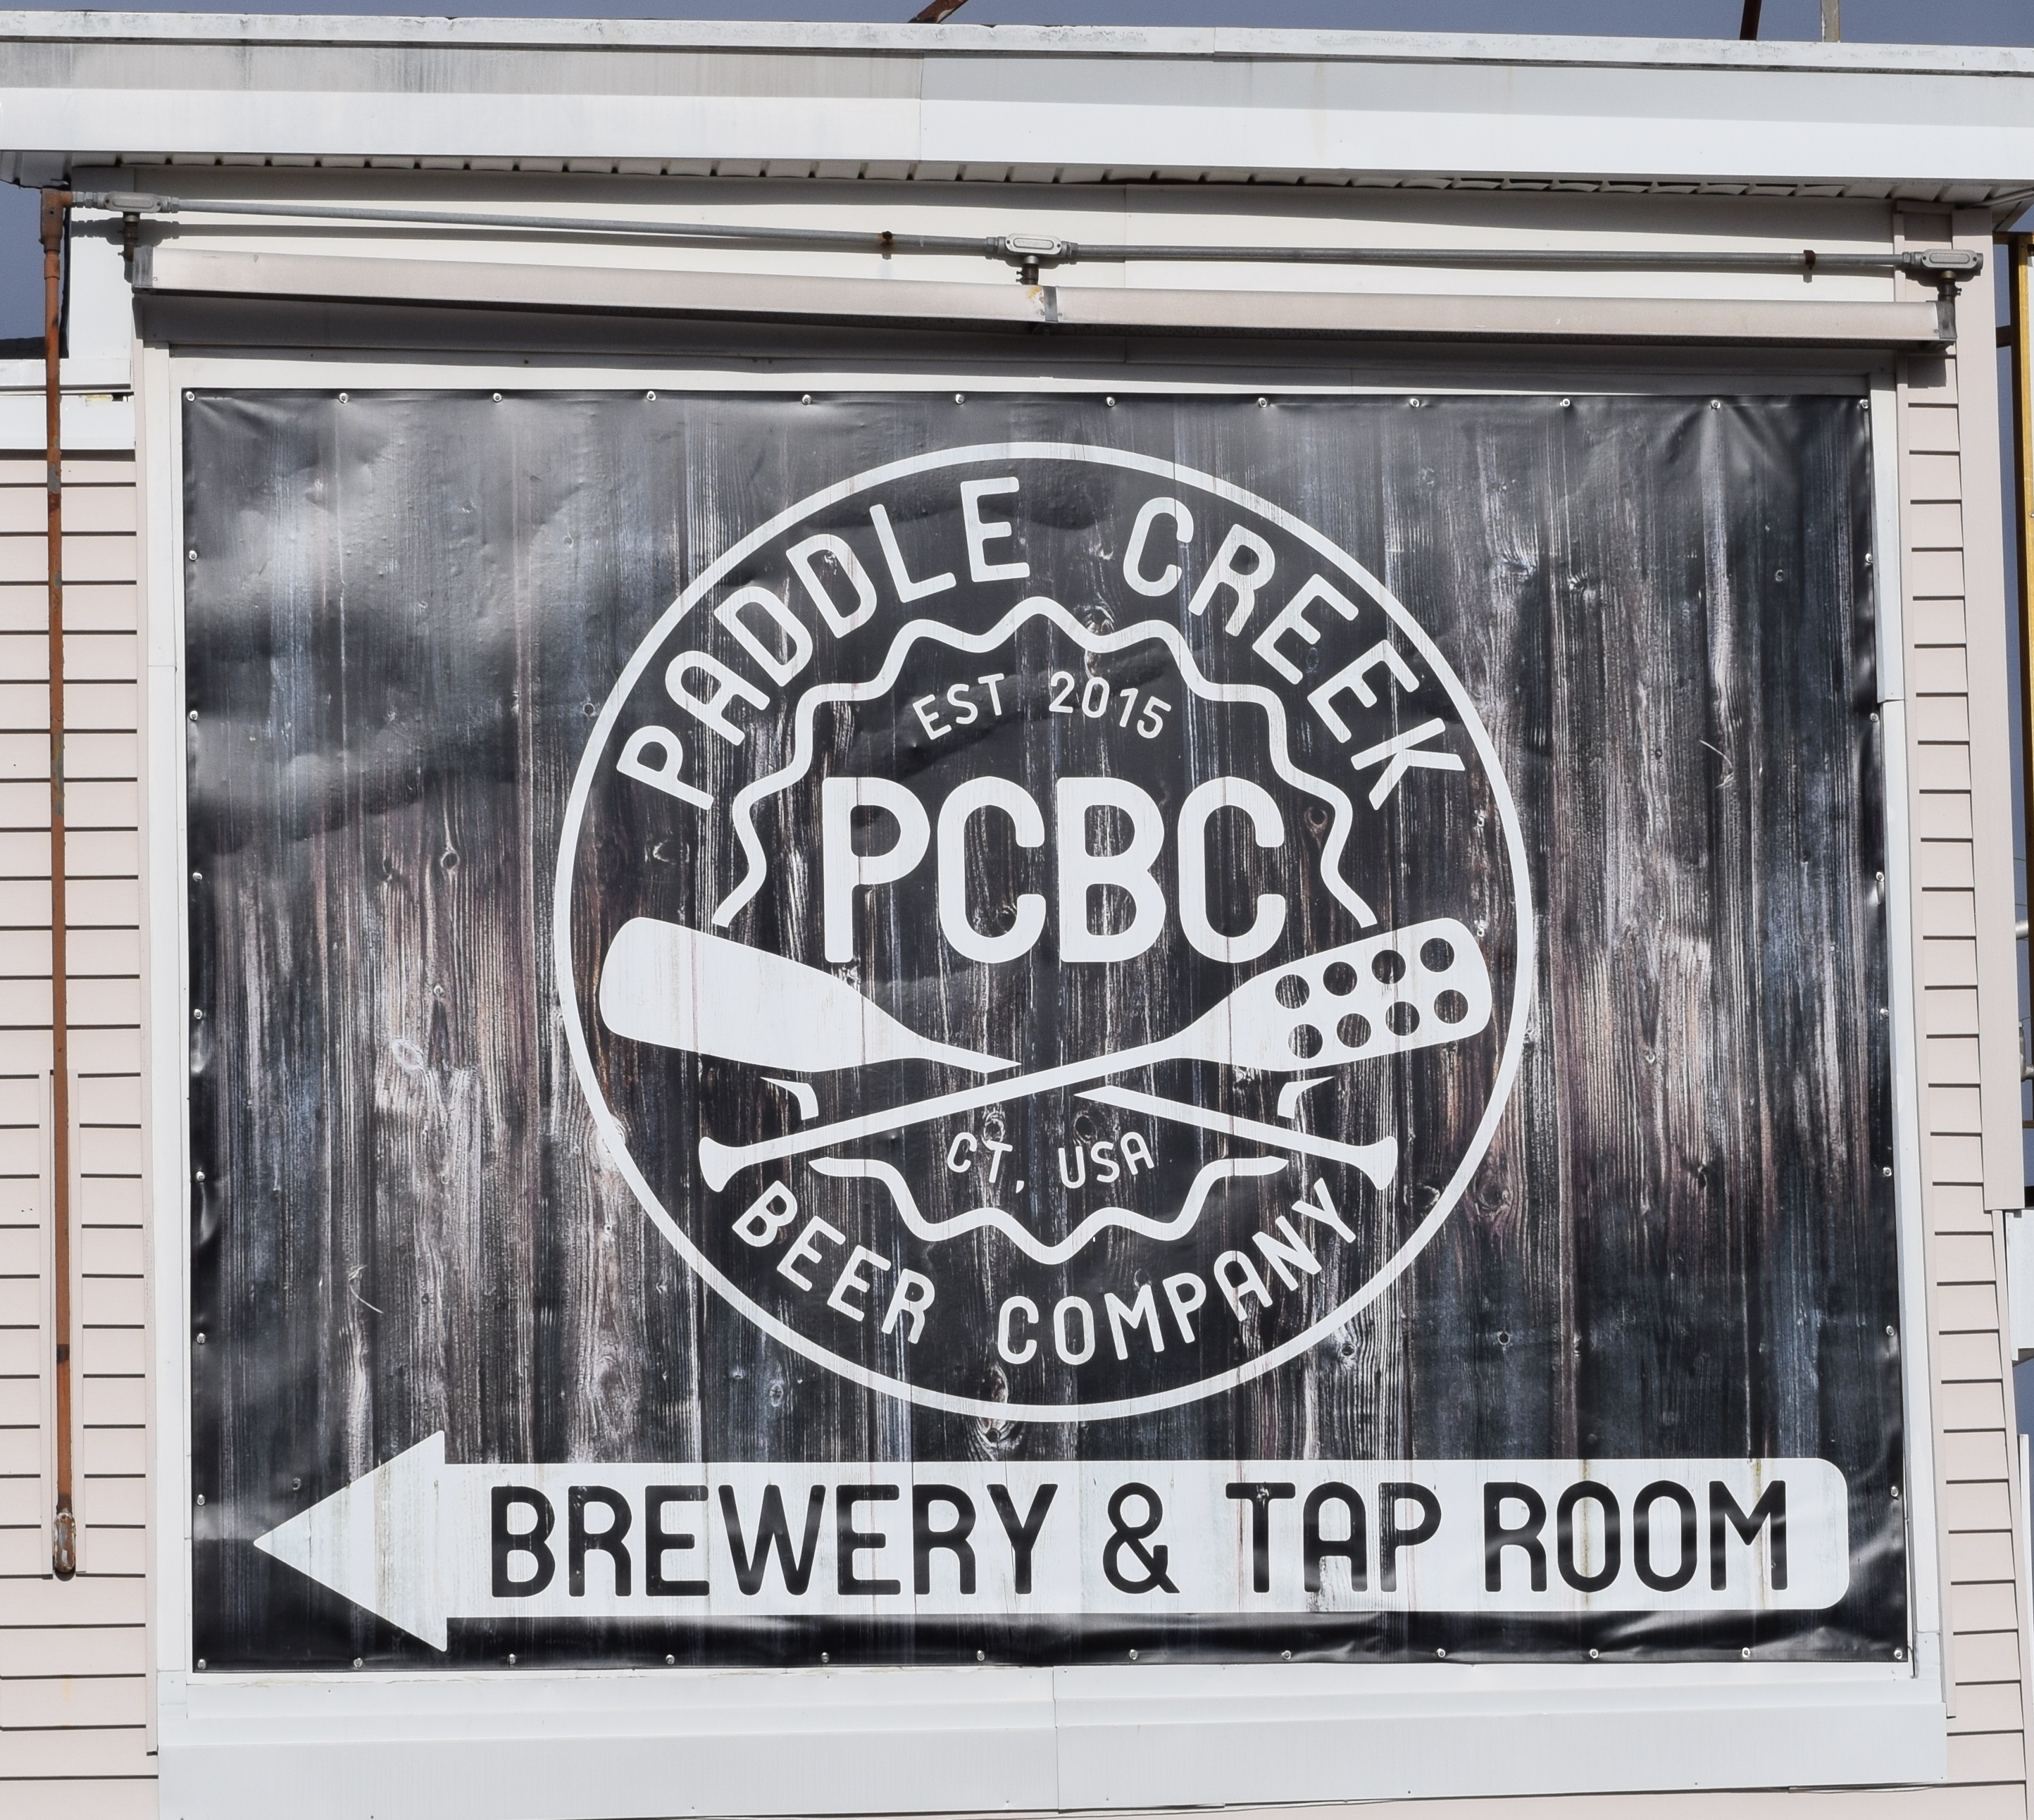 Paddle Creek Beer Co. East Hartford